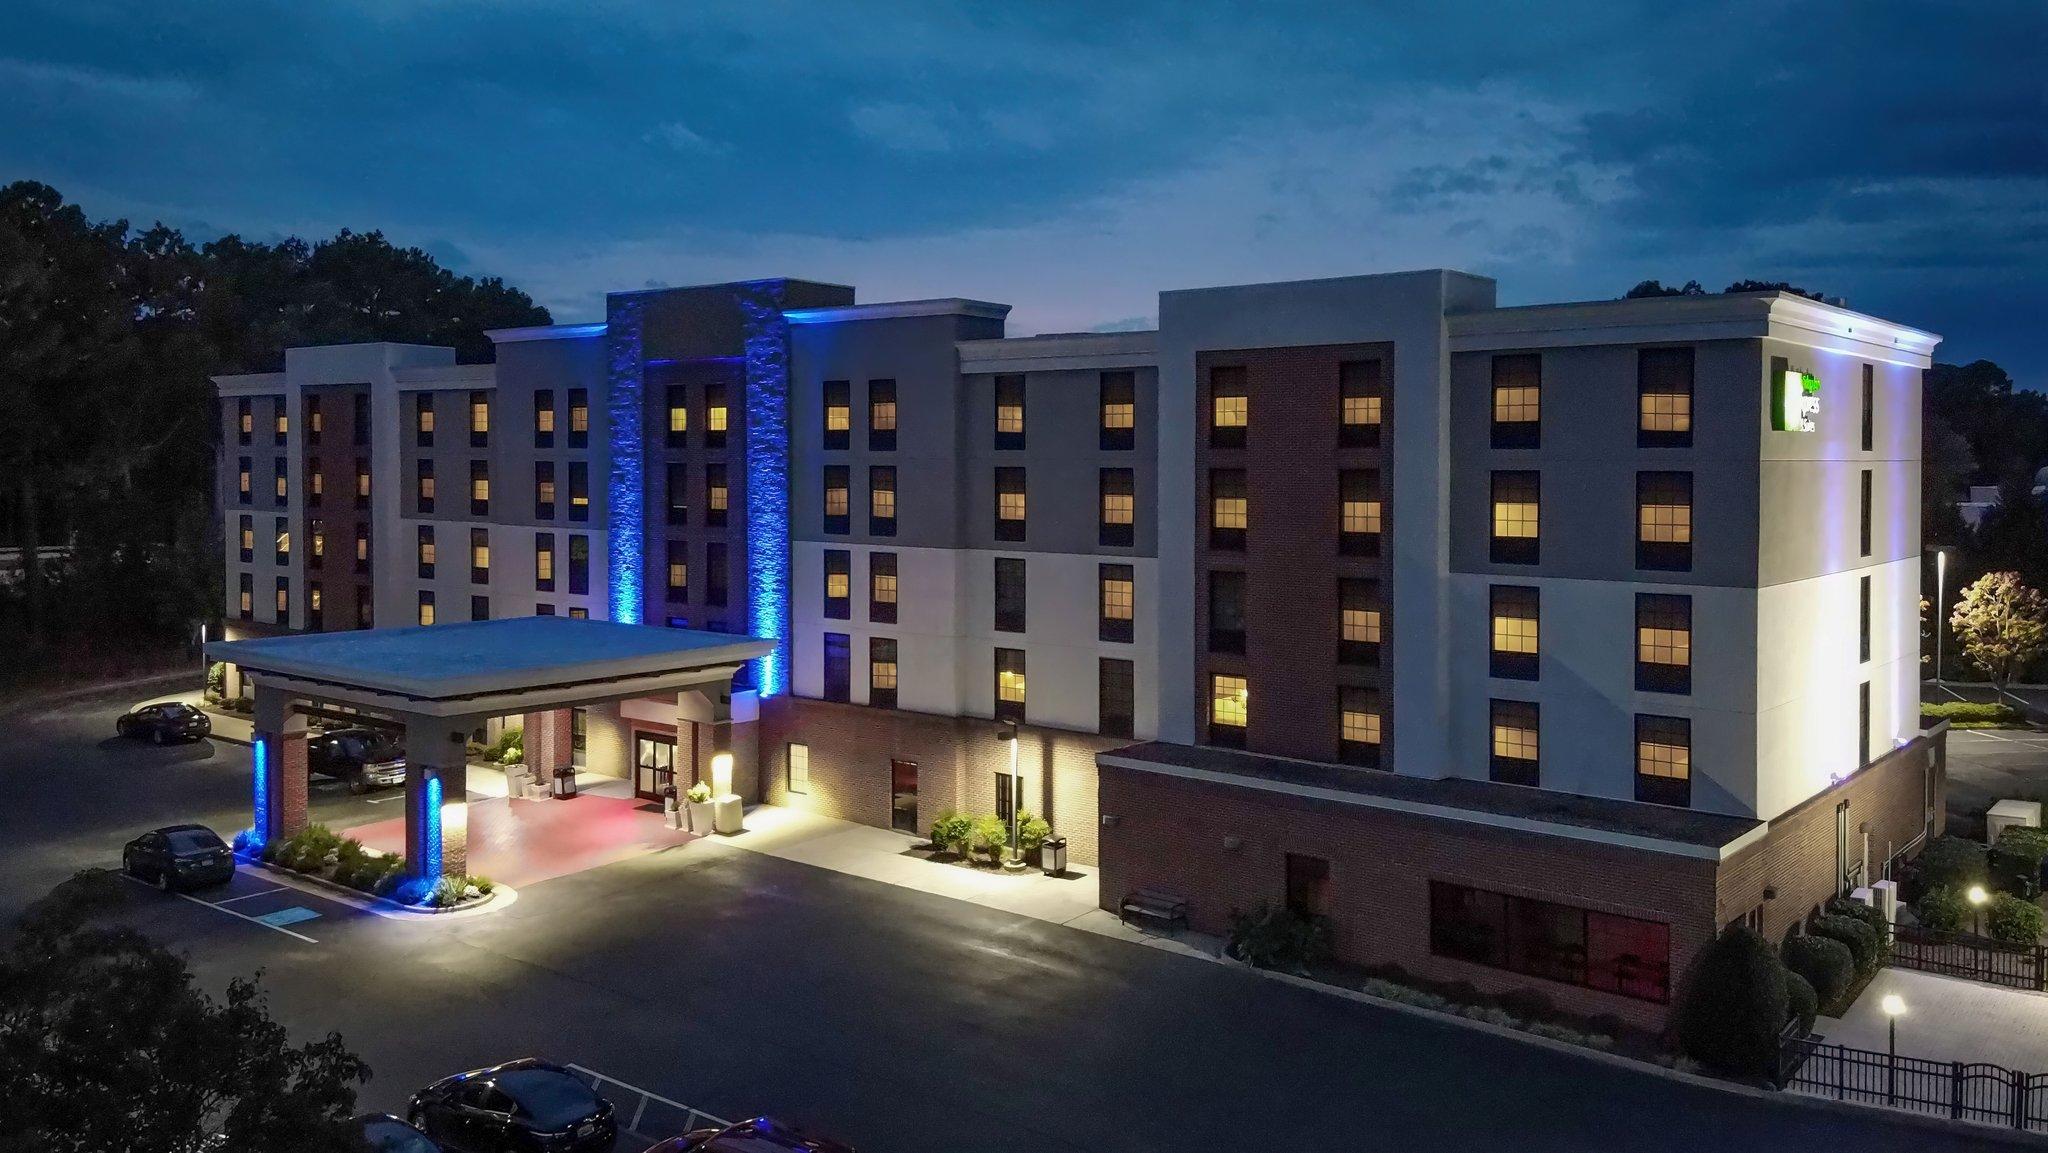 Holiday Inn Express & Suites Newport News in Newport News, VA